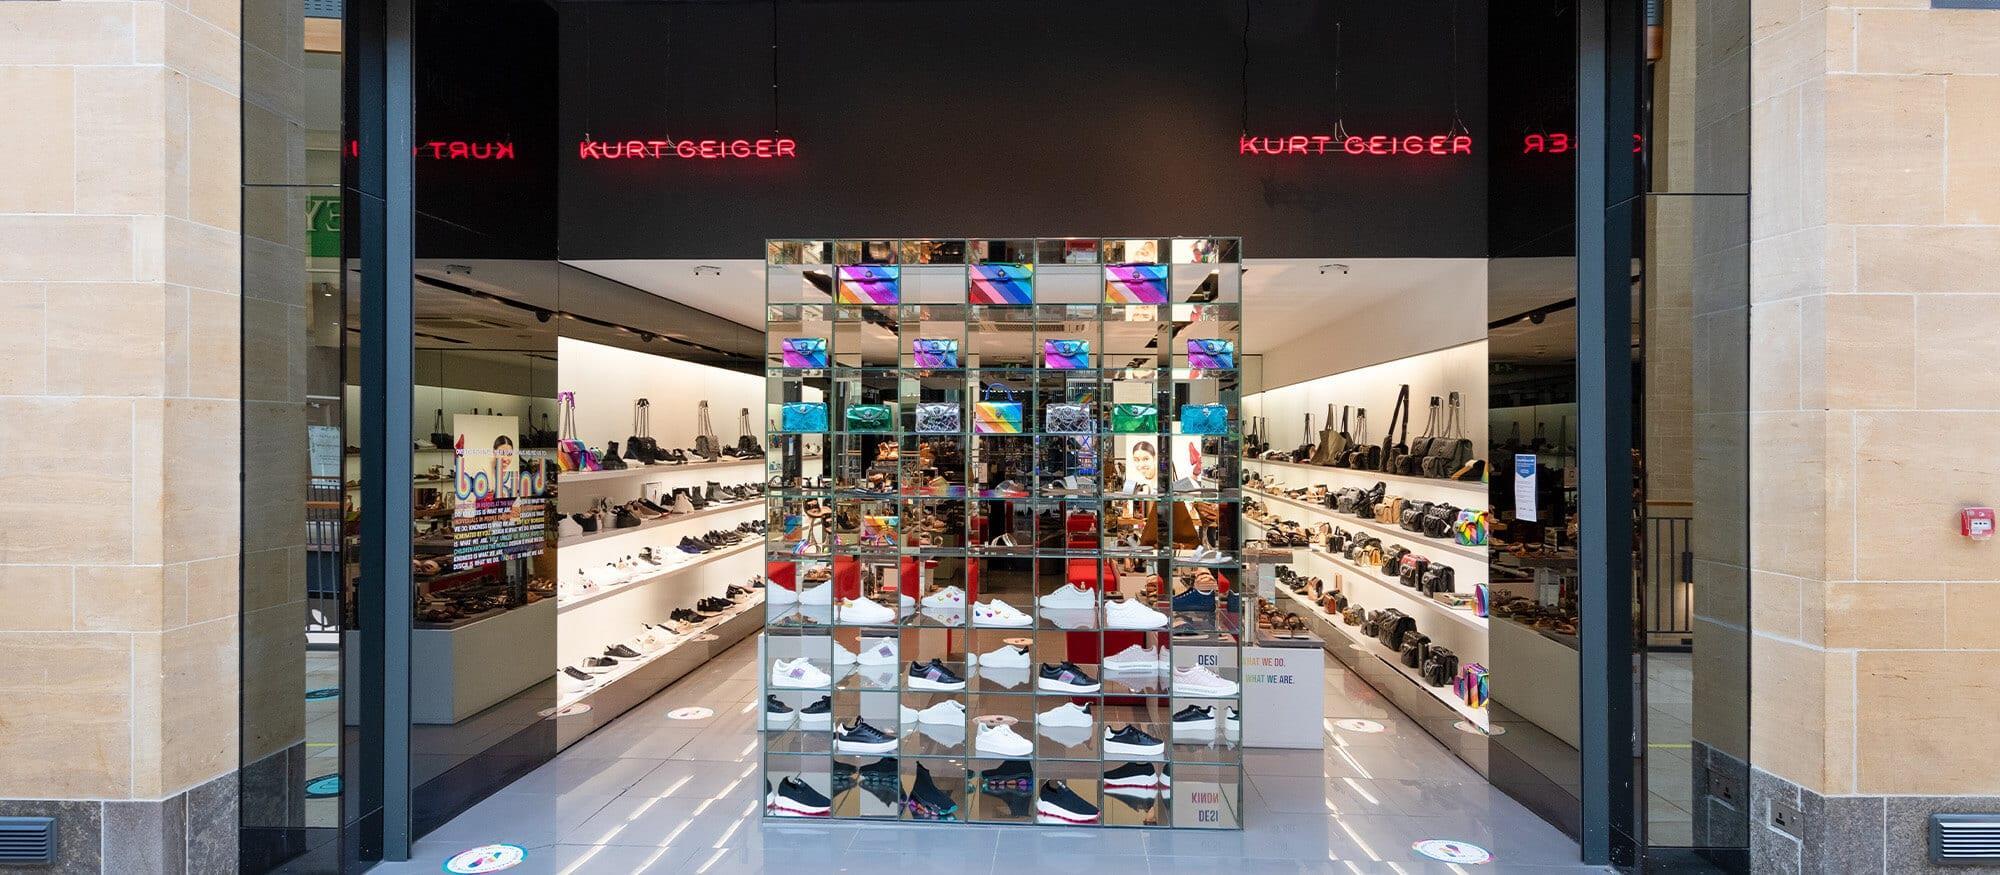 Kurt Geiger opens flagship store in Oxford Street London - ACROSS